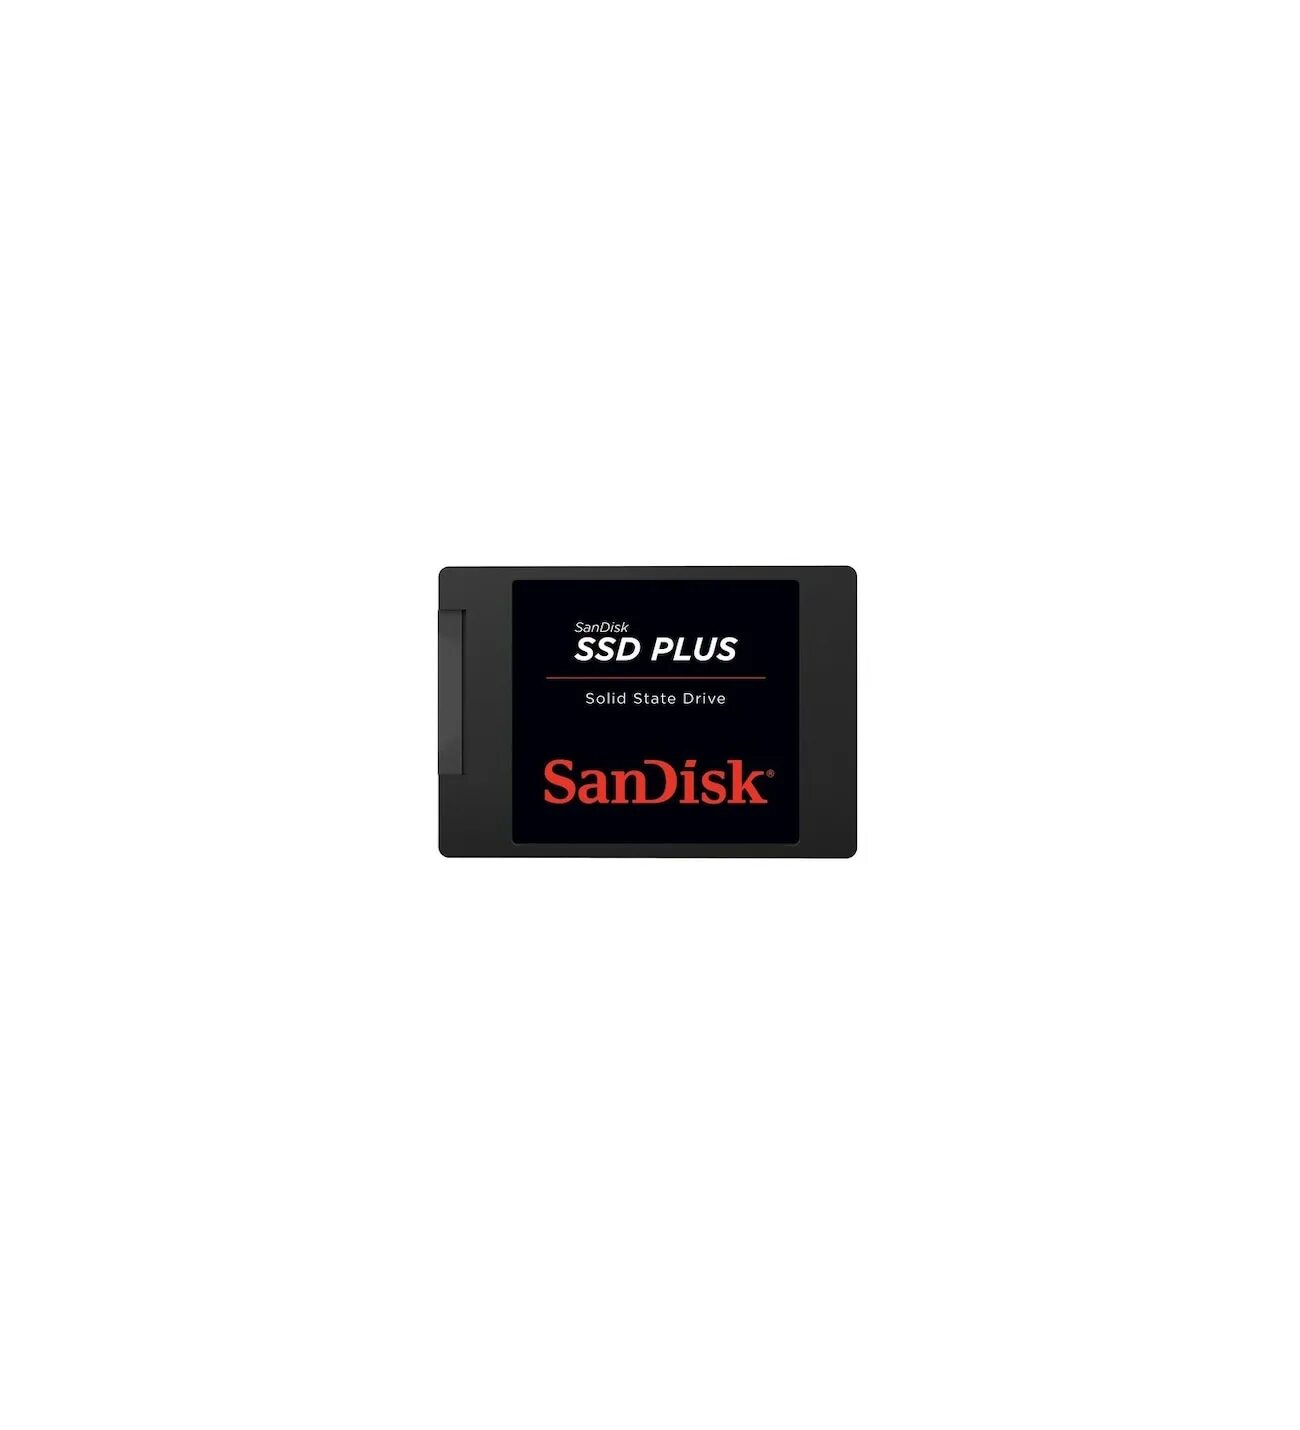 Sandisk ssd. Твердотельный накопитель SANDISK READYCACHE SSD 32gb. Твердотельный накопитель SANDISK SDSSDX-120g-g25. Твердотельный накопитель SANDISK SDSSDP-064g-g25. SATA 6 SANDISK SSD.